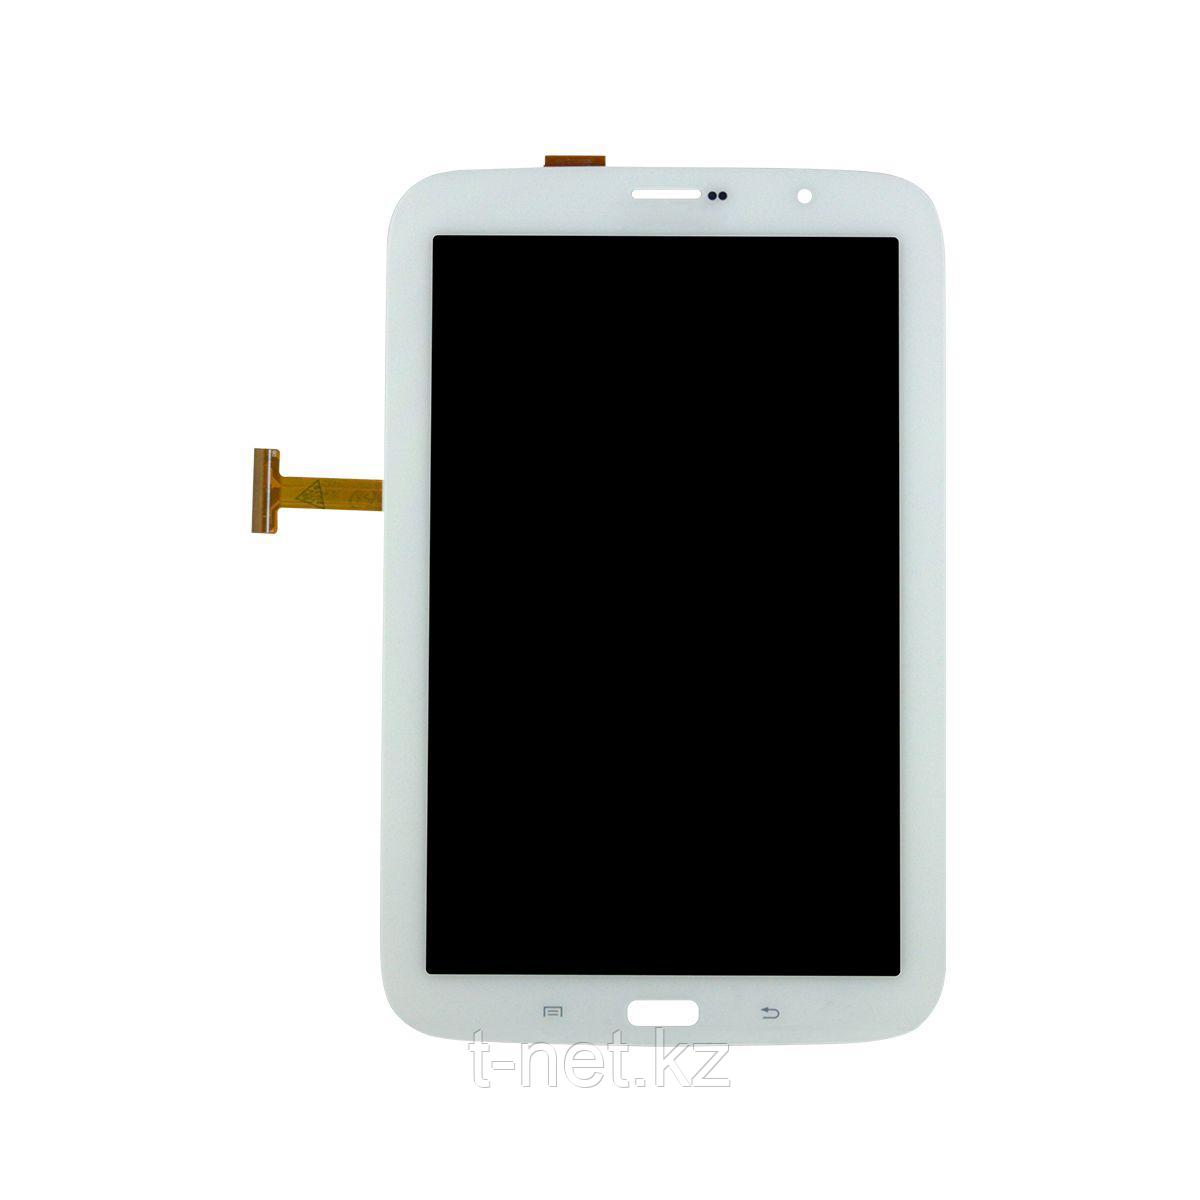 Дисплей Samsung Galaxy Note 8.0 N5100, с сенсором, цвет белый